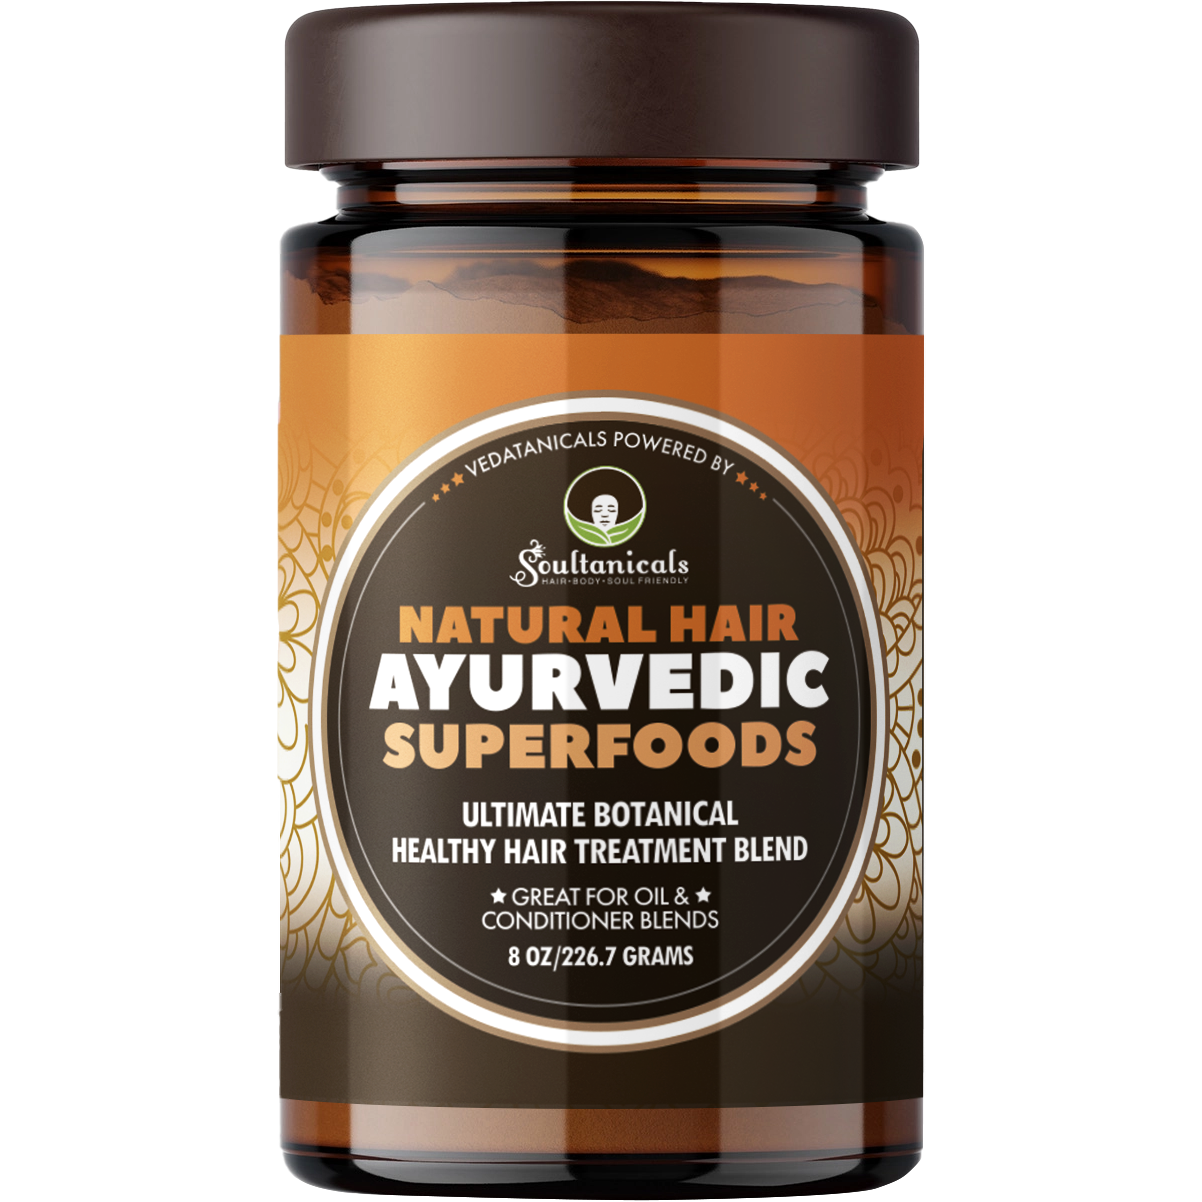 Natural Hair Ayurvedic Superfoods Treatment Blend